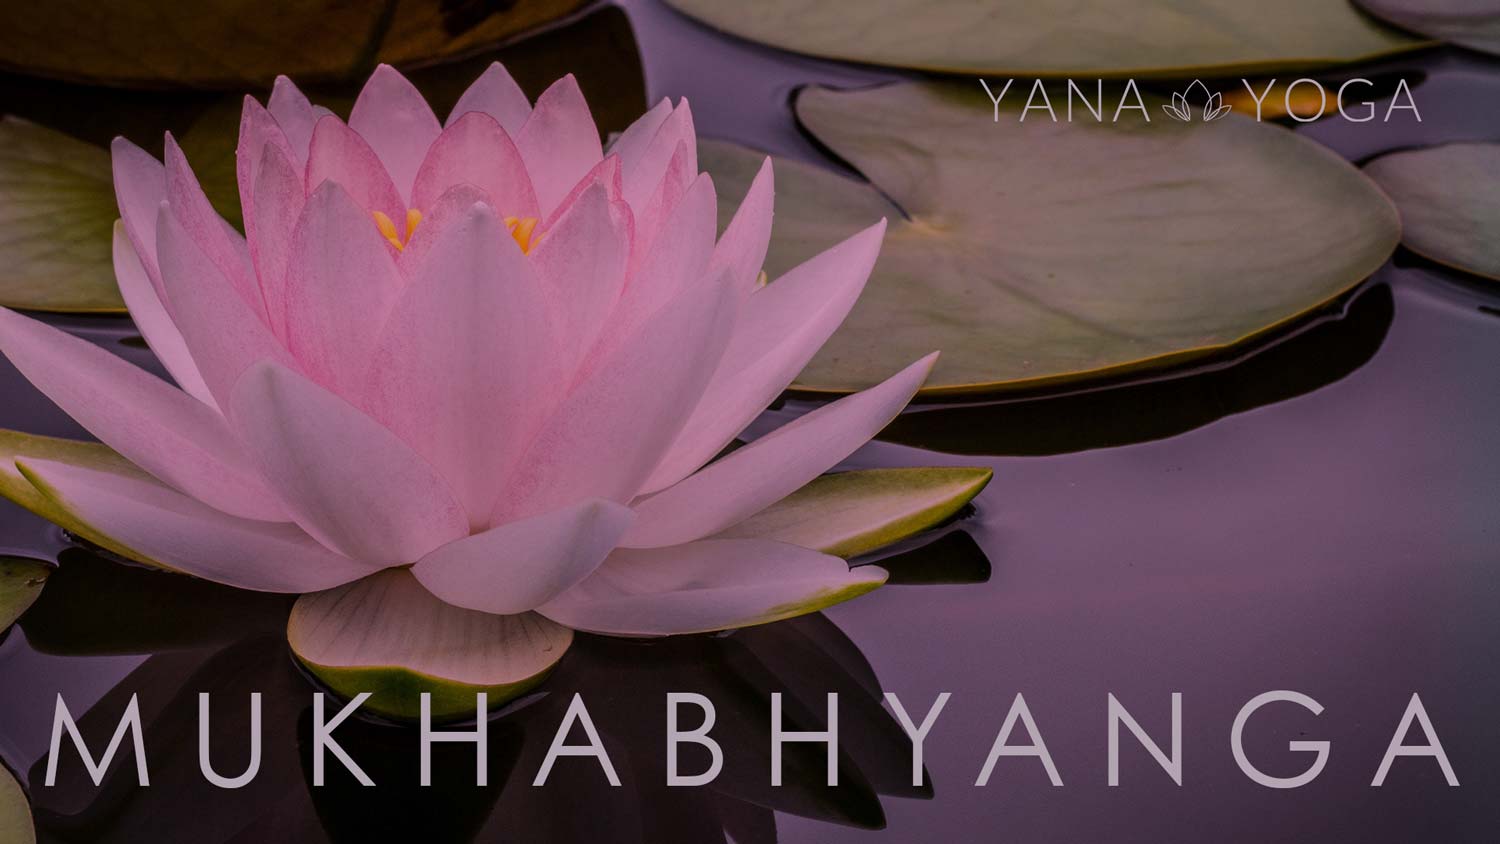 Mukhabhyanga Massage Yana-Yoga.de